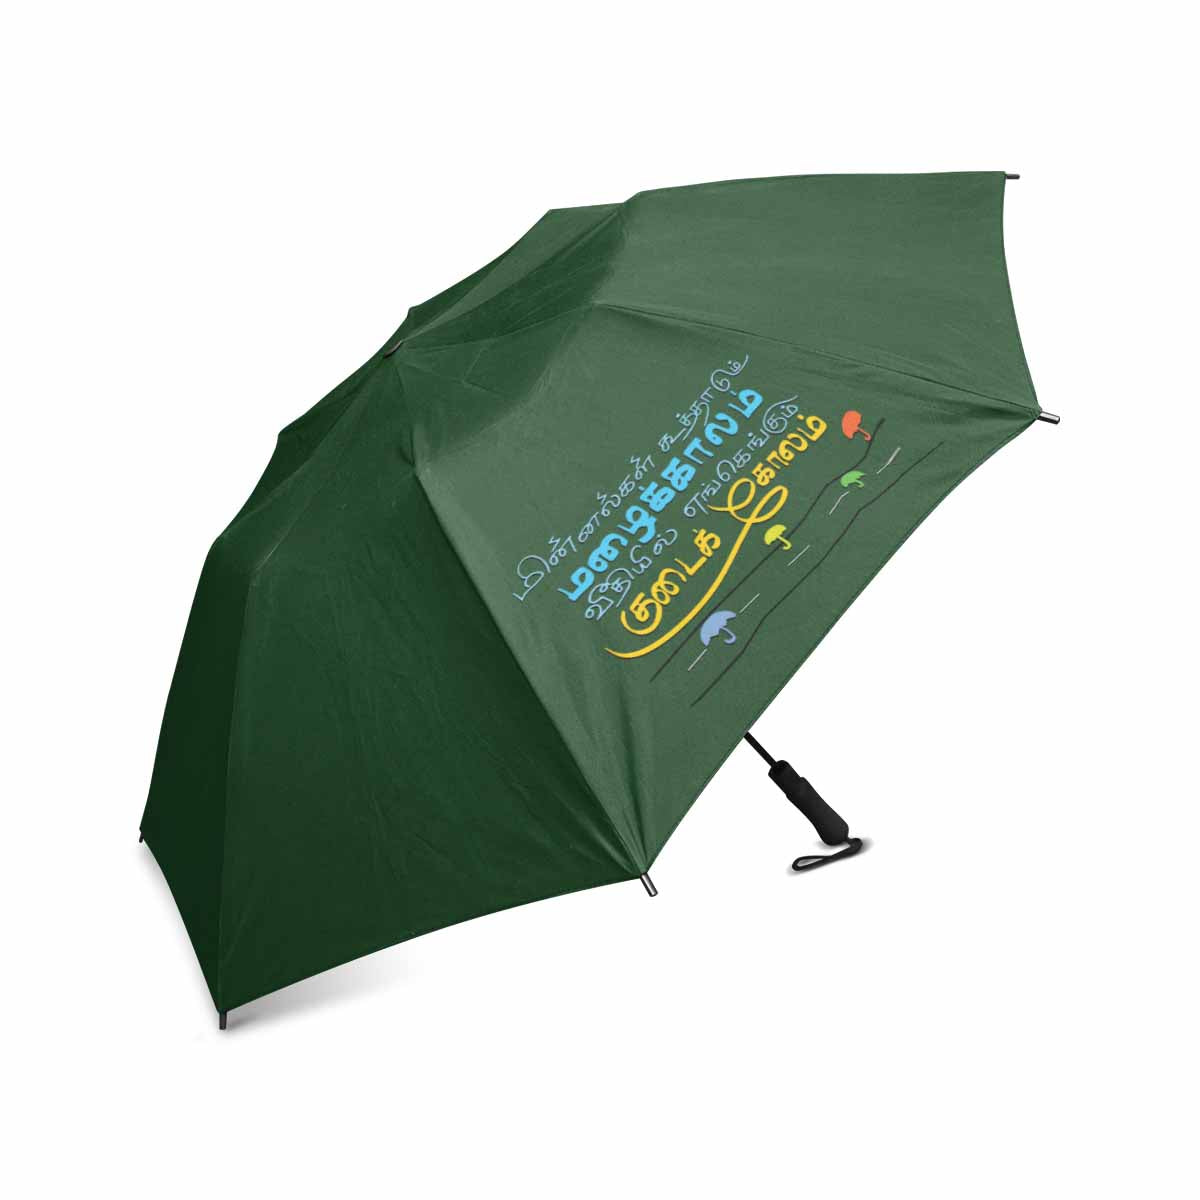 Green Thamizh semi automatic foldable umbrella 42 inch Minnalgal Koothaadum Mazhaikaalam gift idea for friends and family